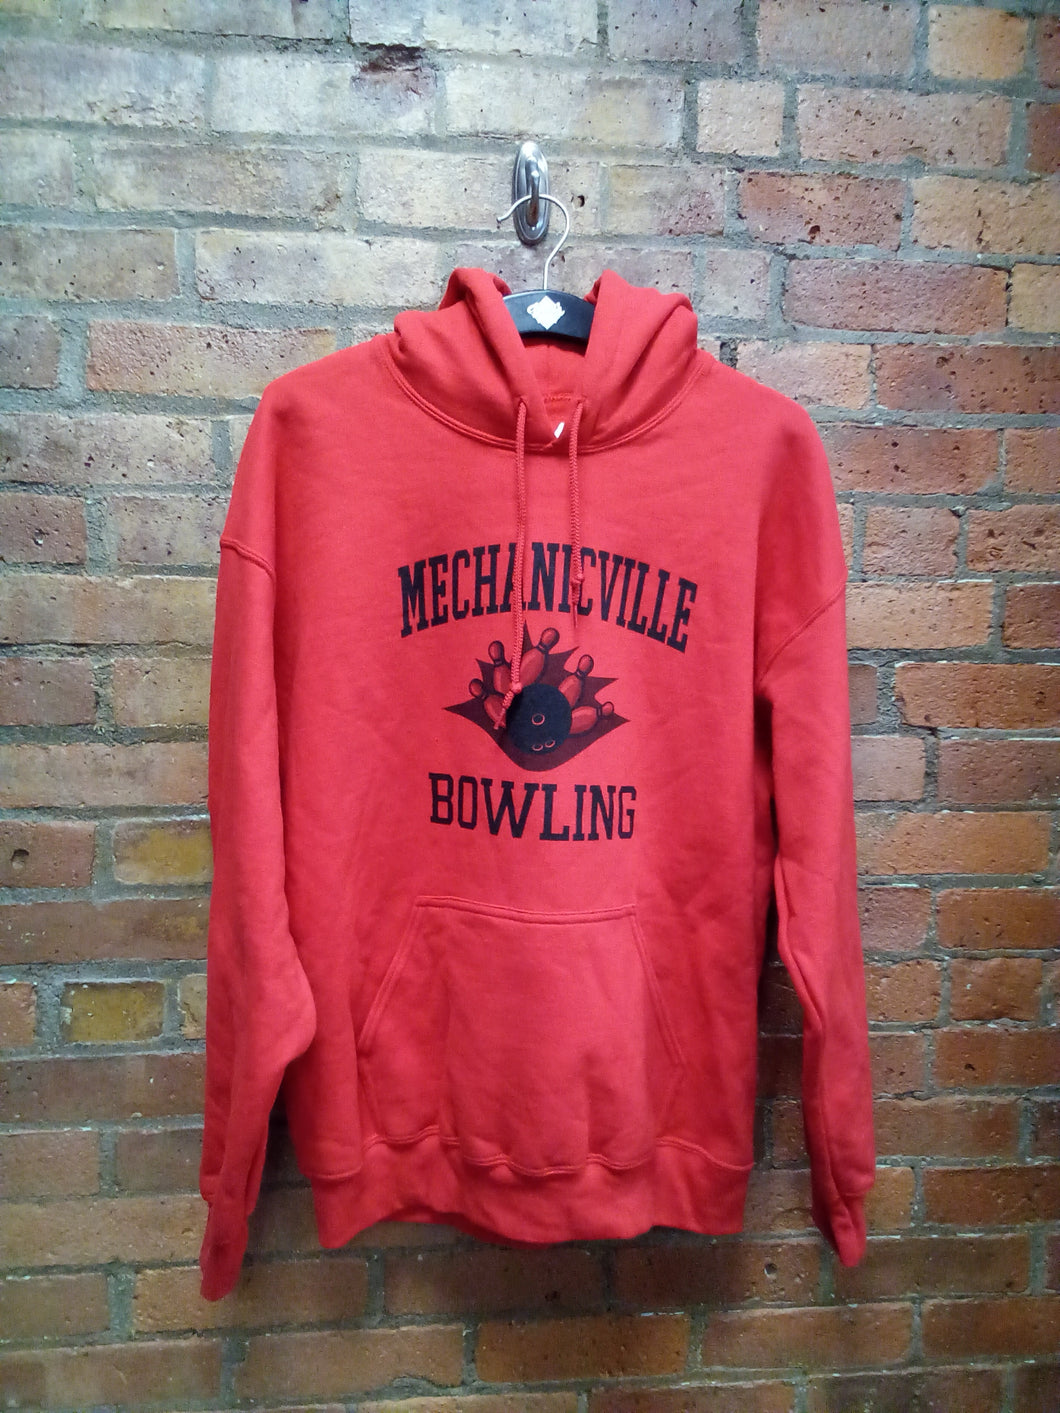 CLEARANCE - Mechanicville Bowling Hooded Sweatshirt - Size Large